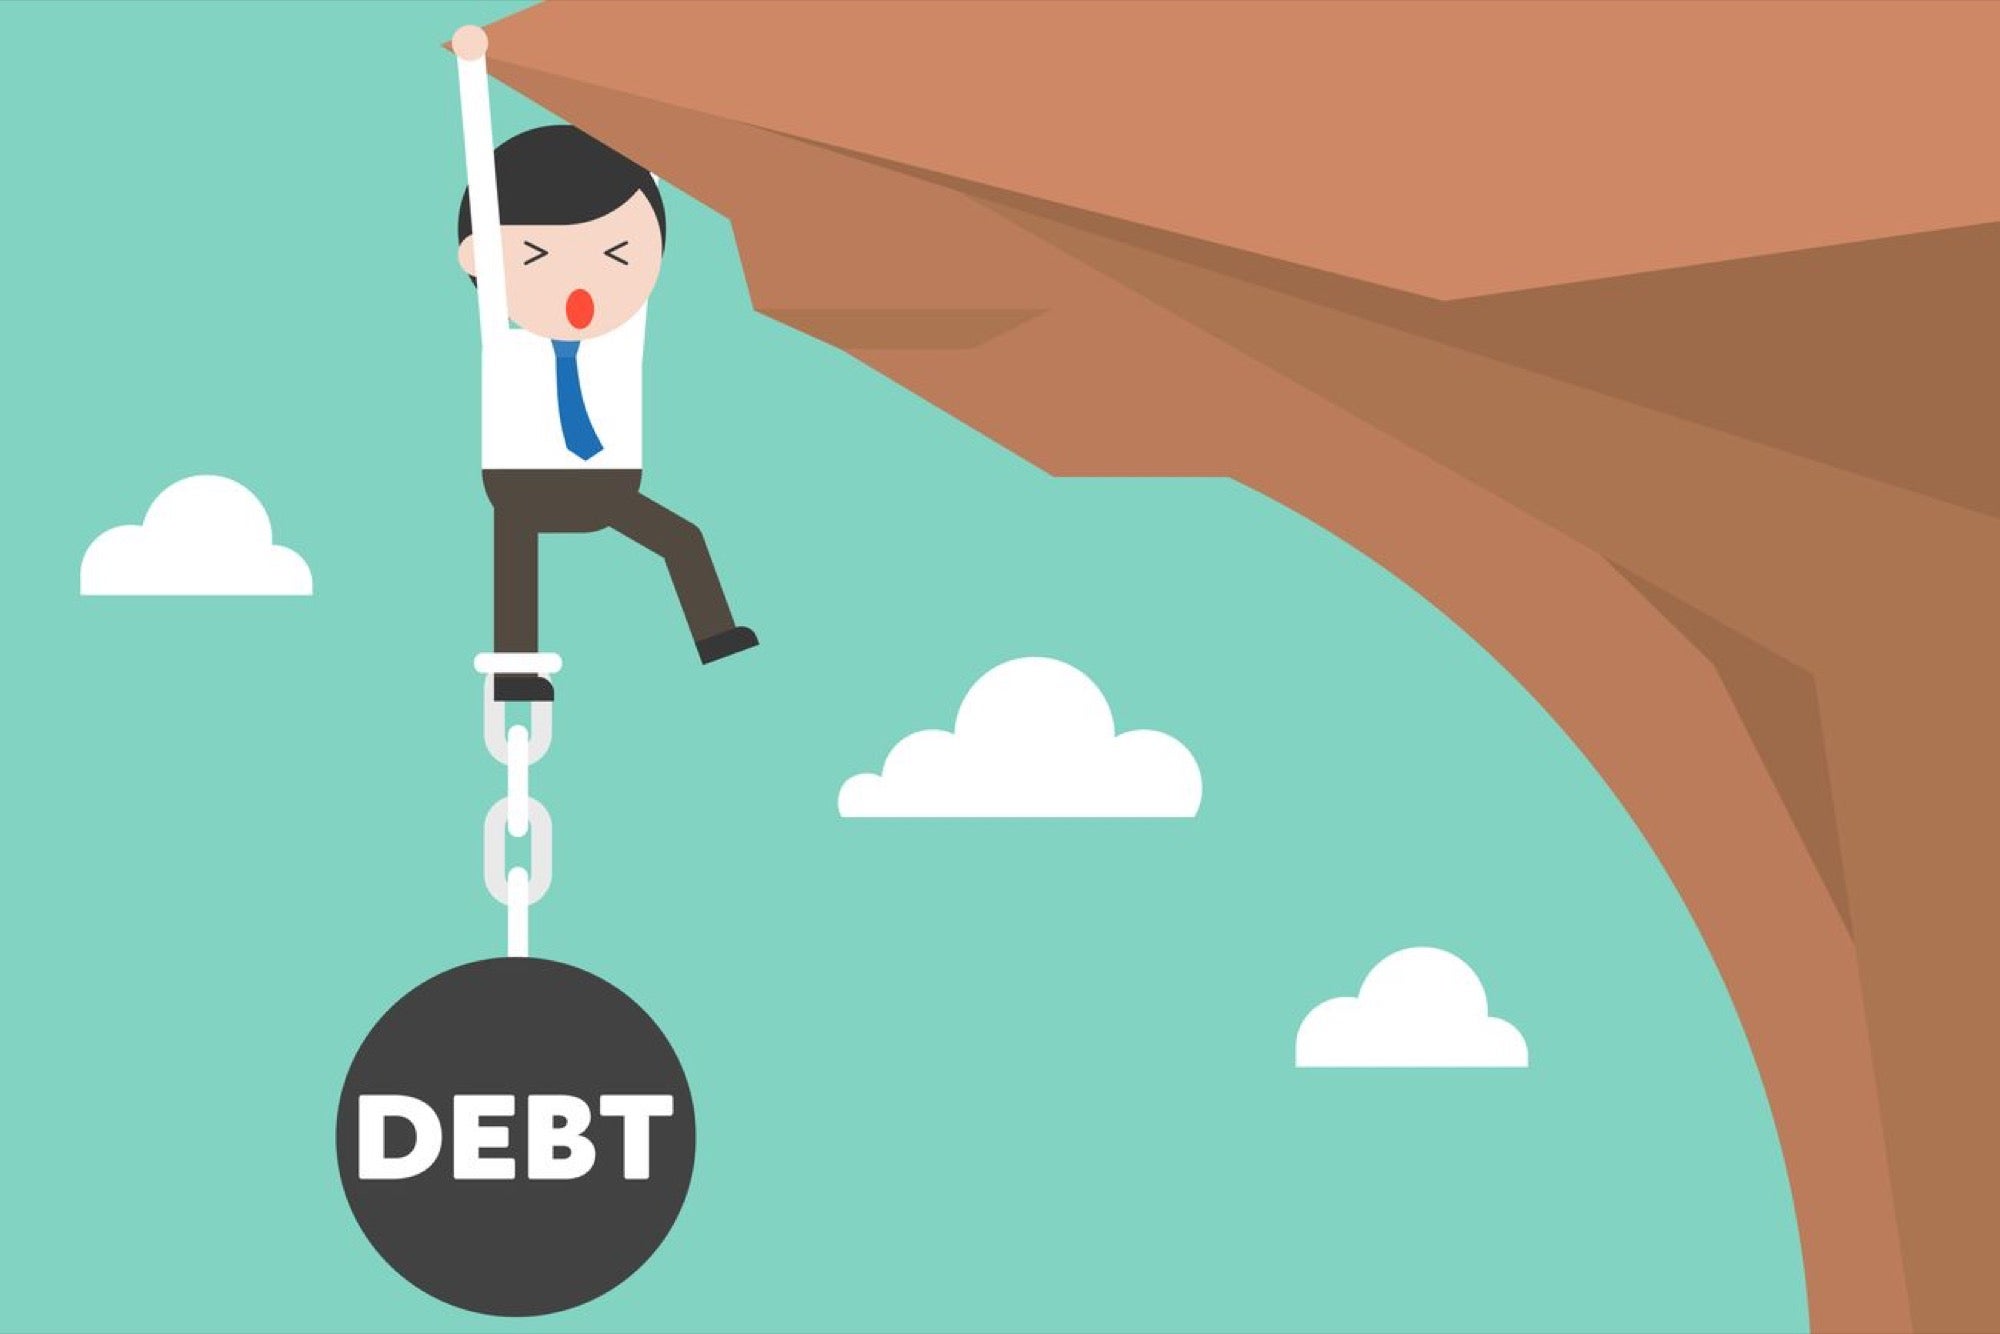 Debt and borrowing